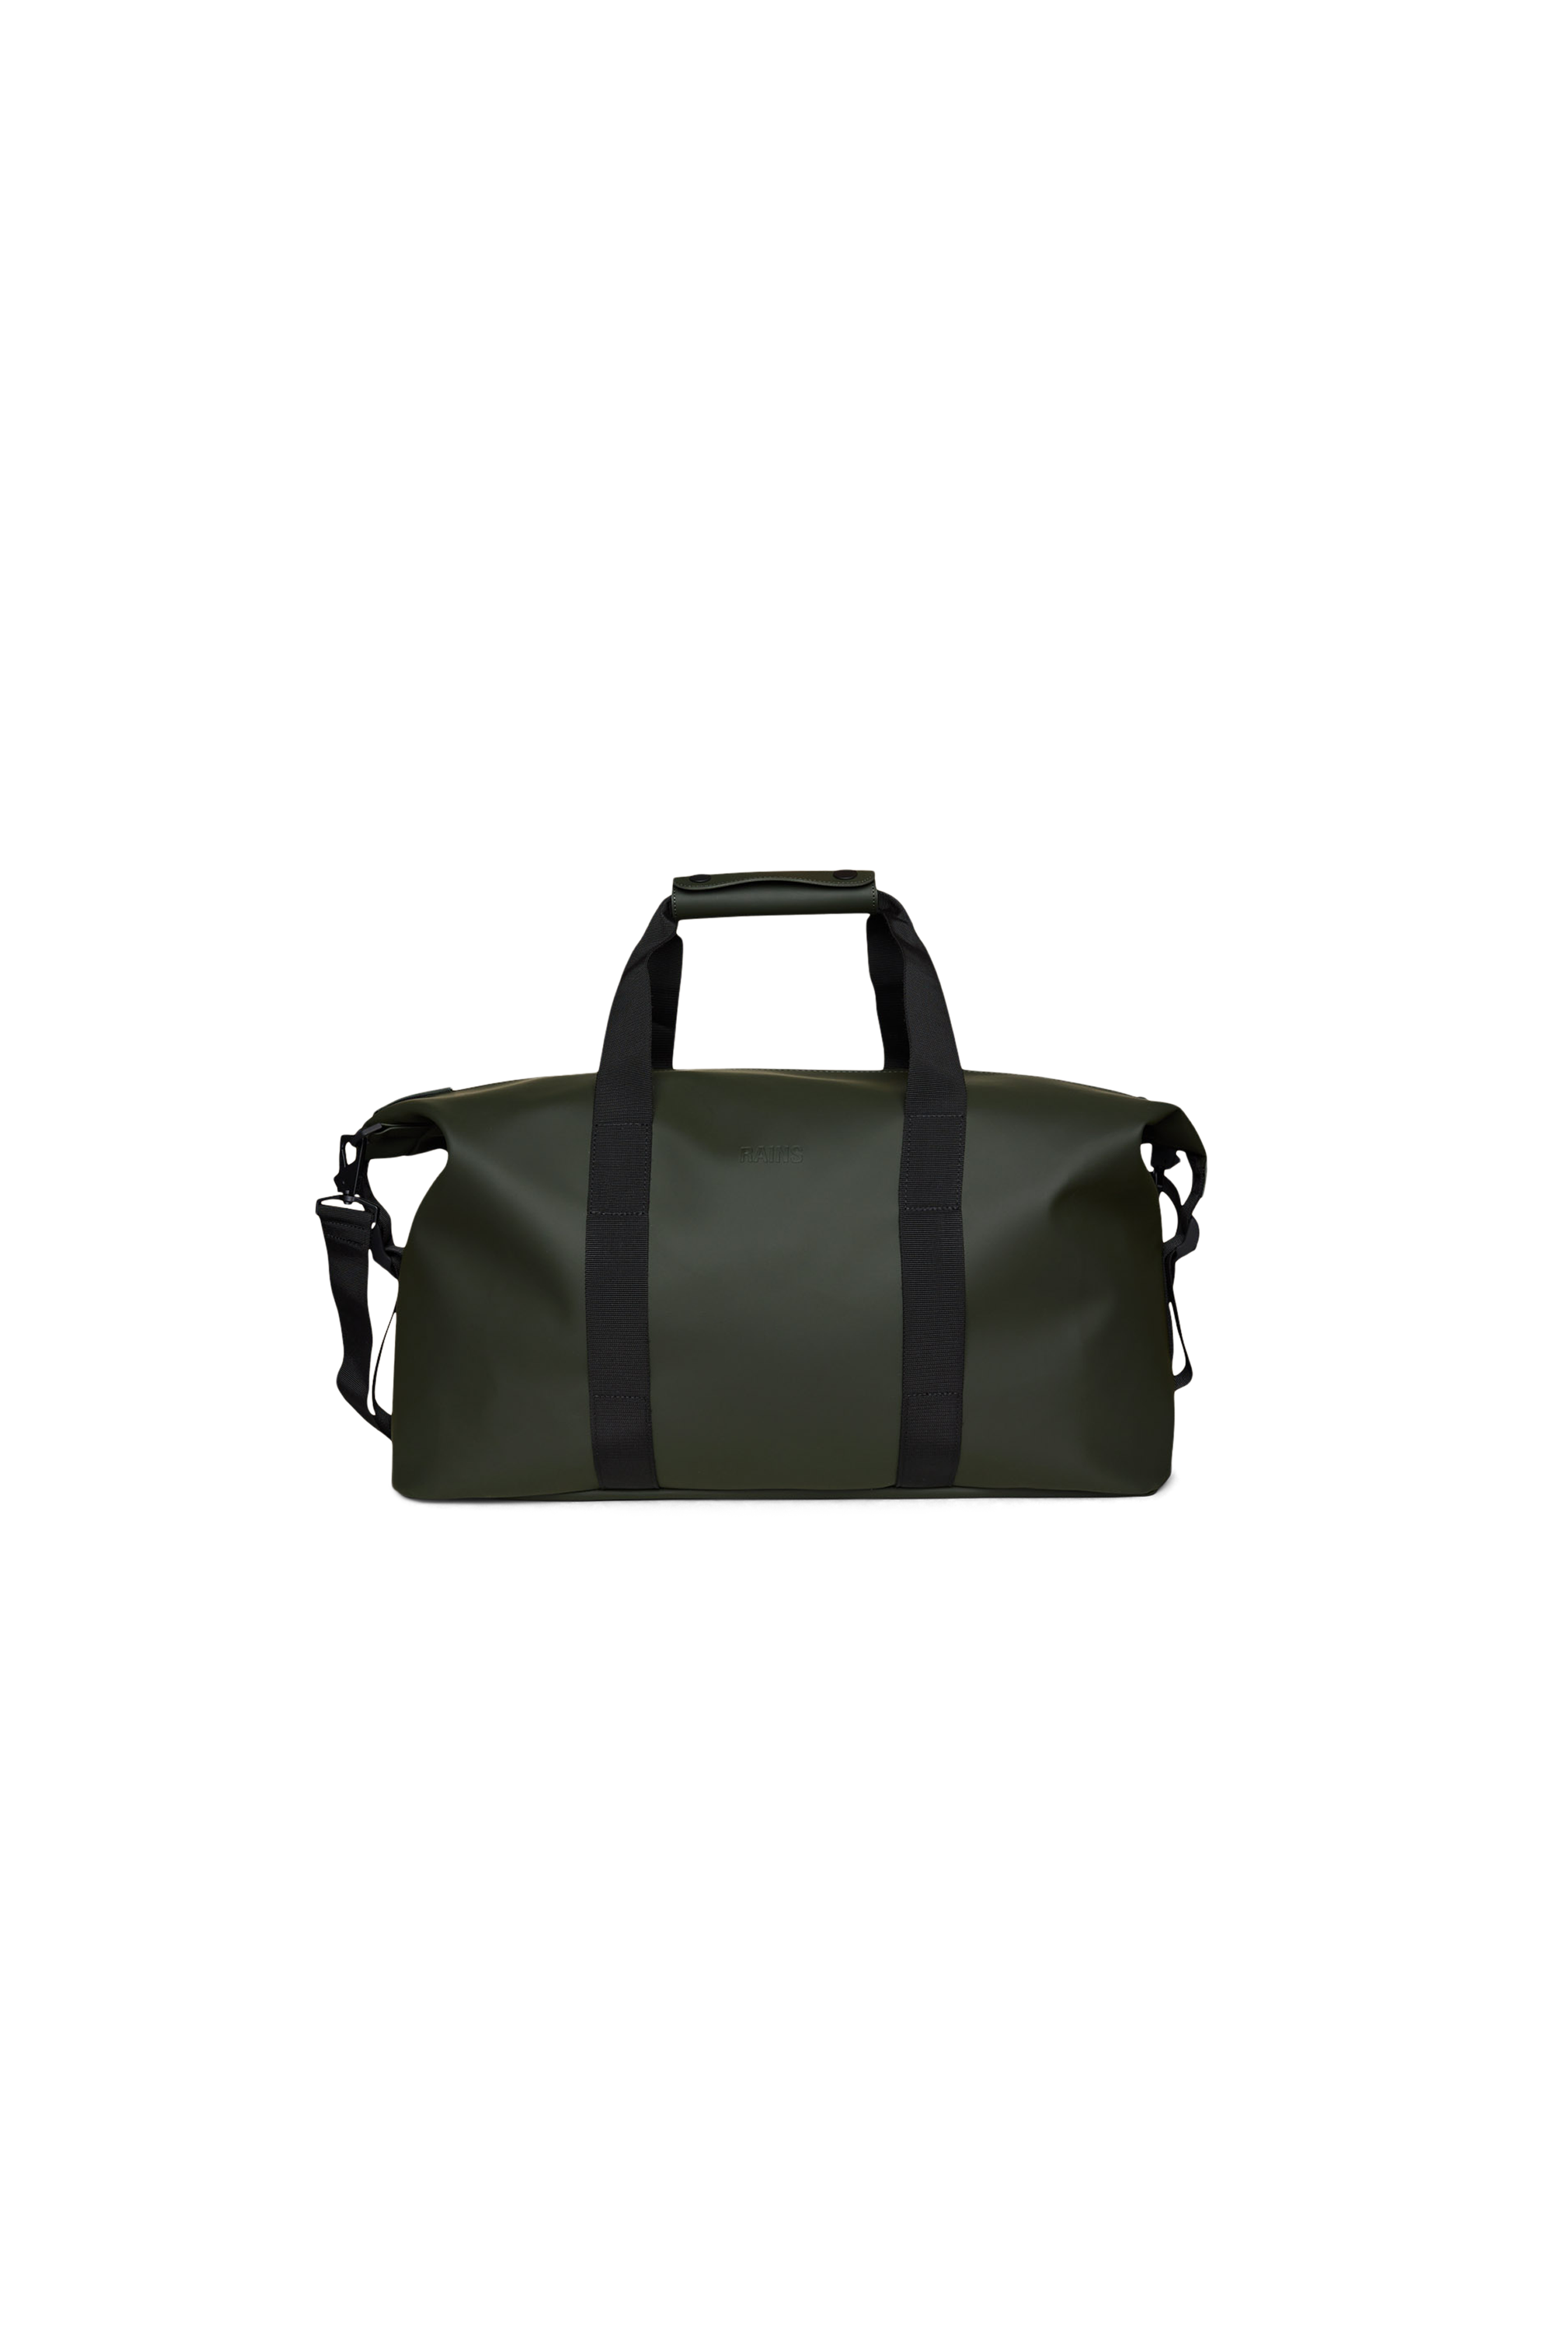 Rains® Hilo Weekend Bag in Black for £79 | No Custom Duty